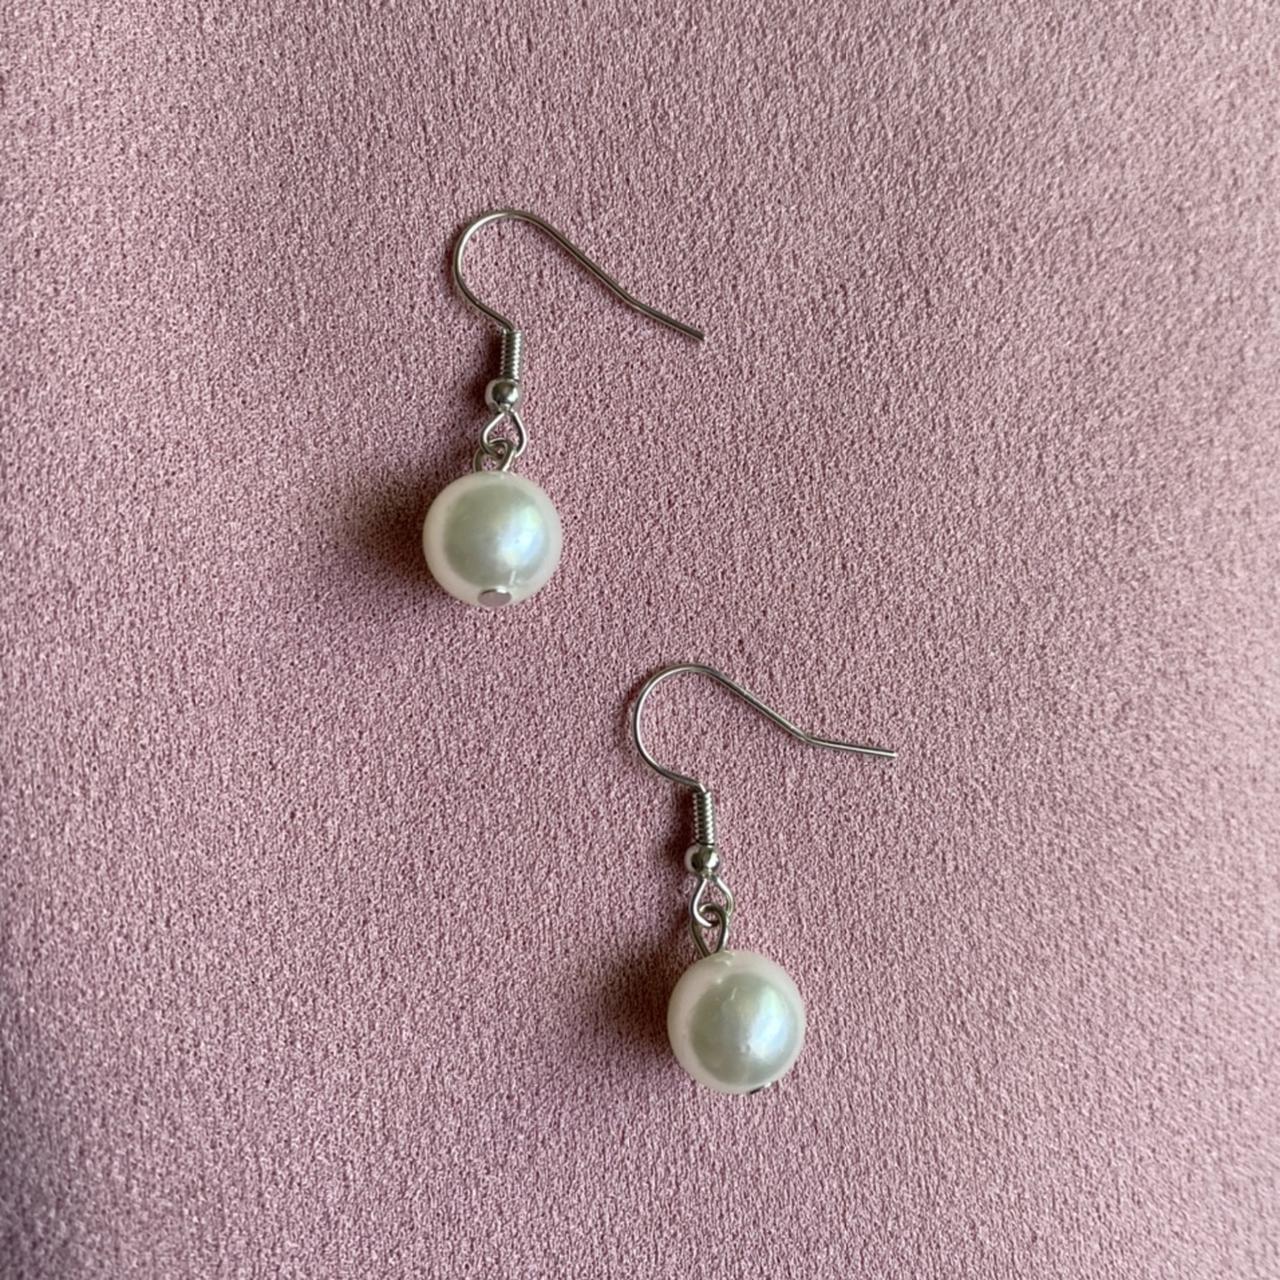 Product Image 1 - Handmade 10mm peral earrings 

-